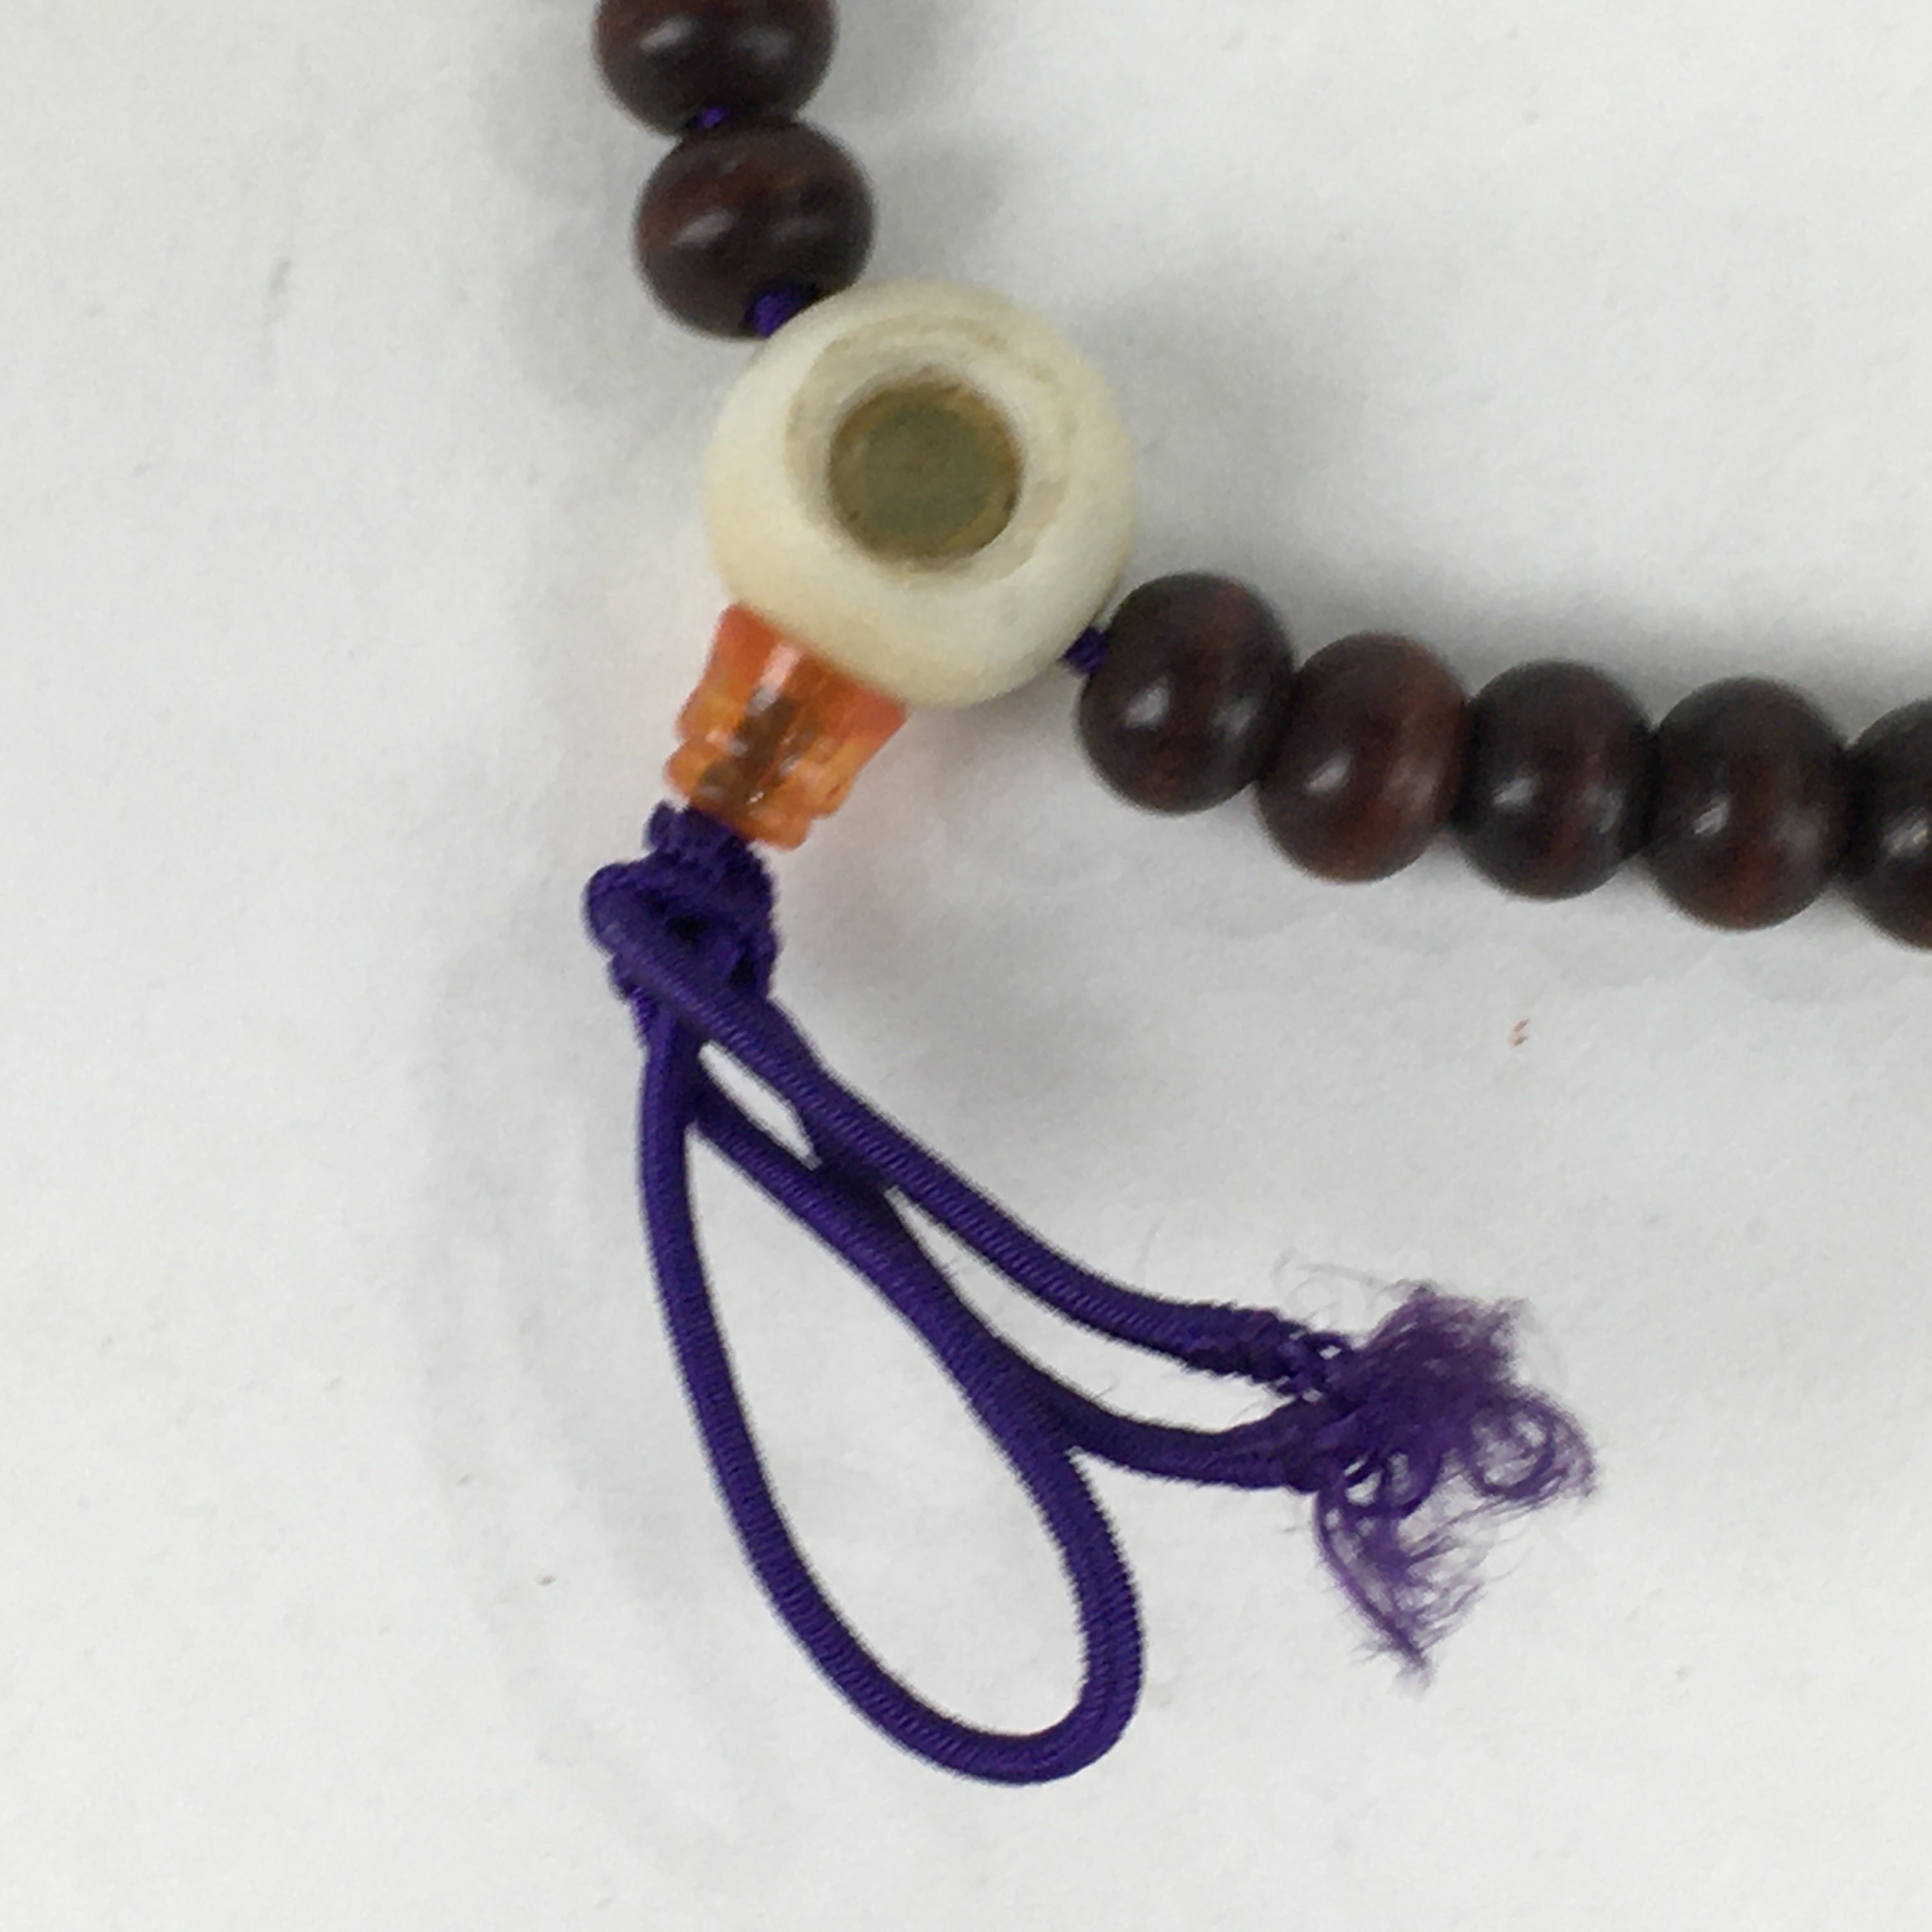 Japanese Buddhist Prayer Beads Vtg Wood Brown Juzu Small Rosary Bracelet JZ88